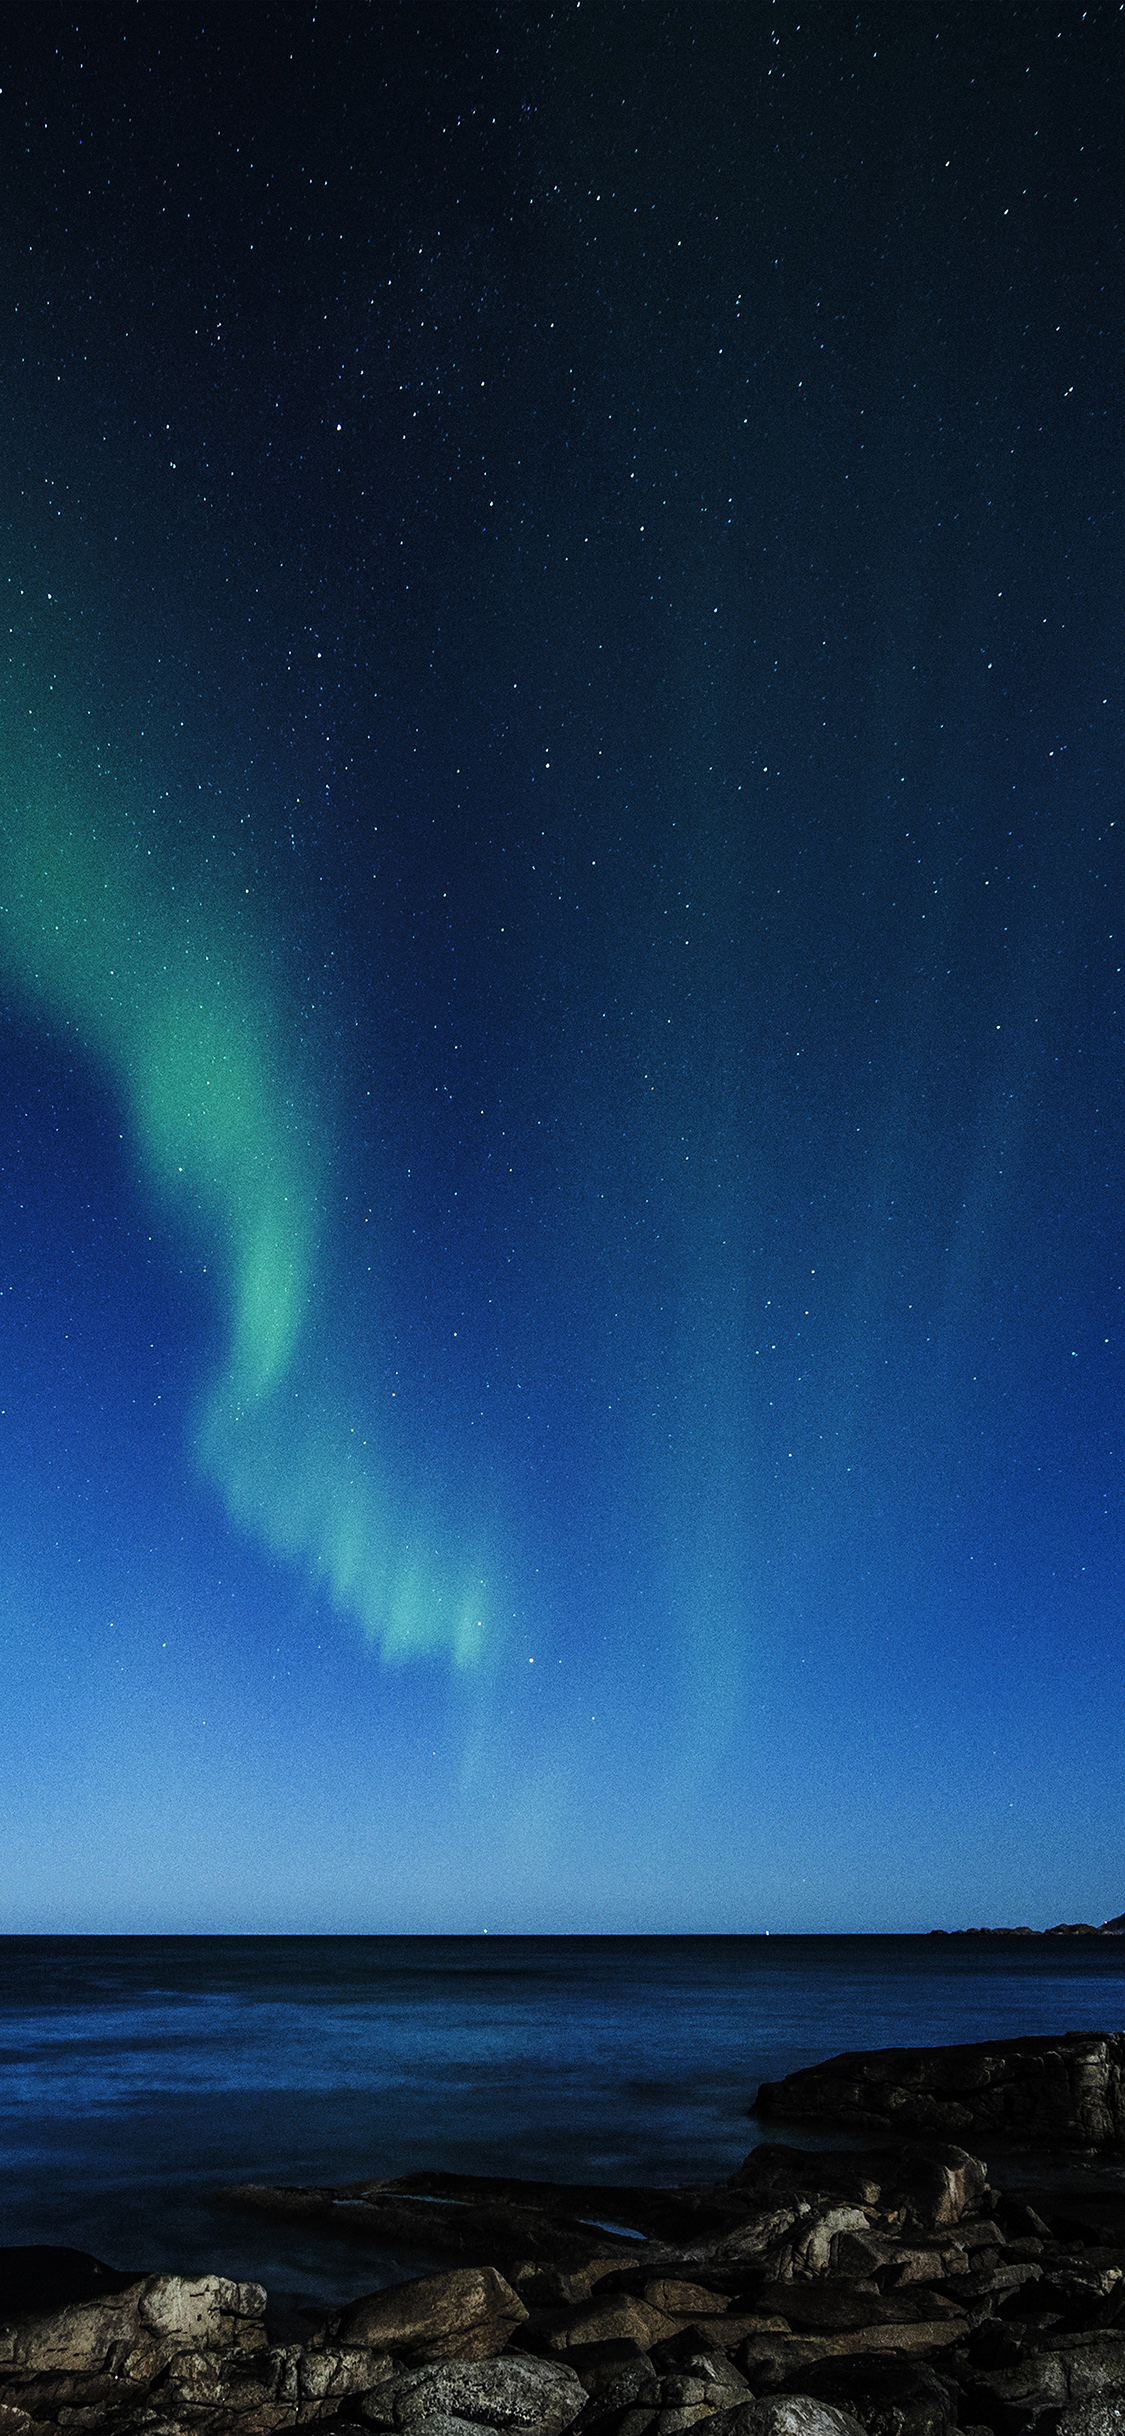 iPhone X wallpaper. aurora night sky star beautiful space sea blue